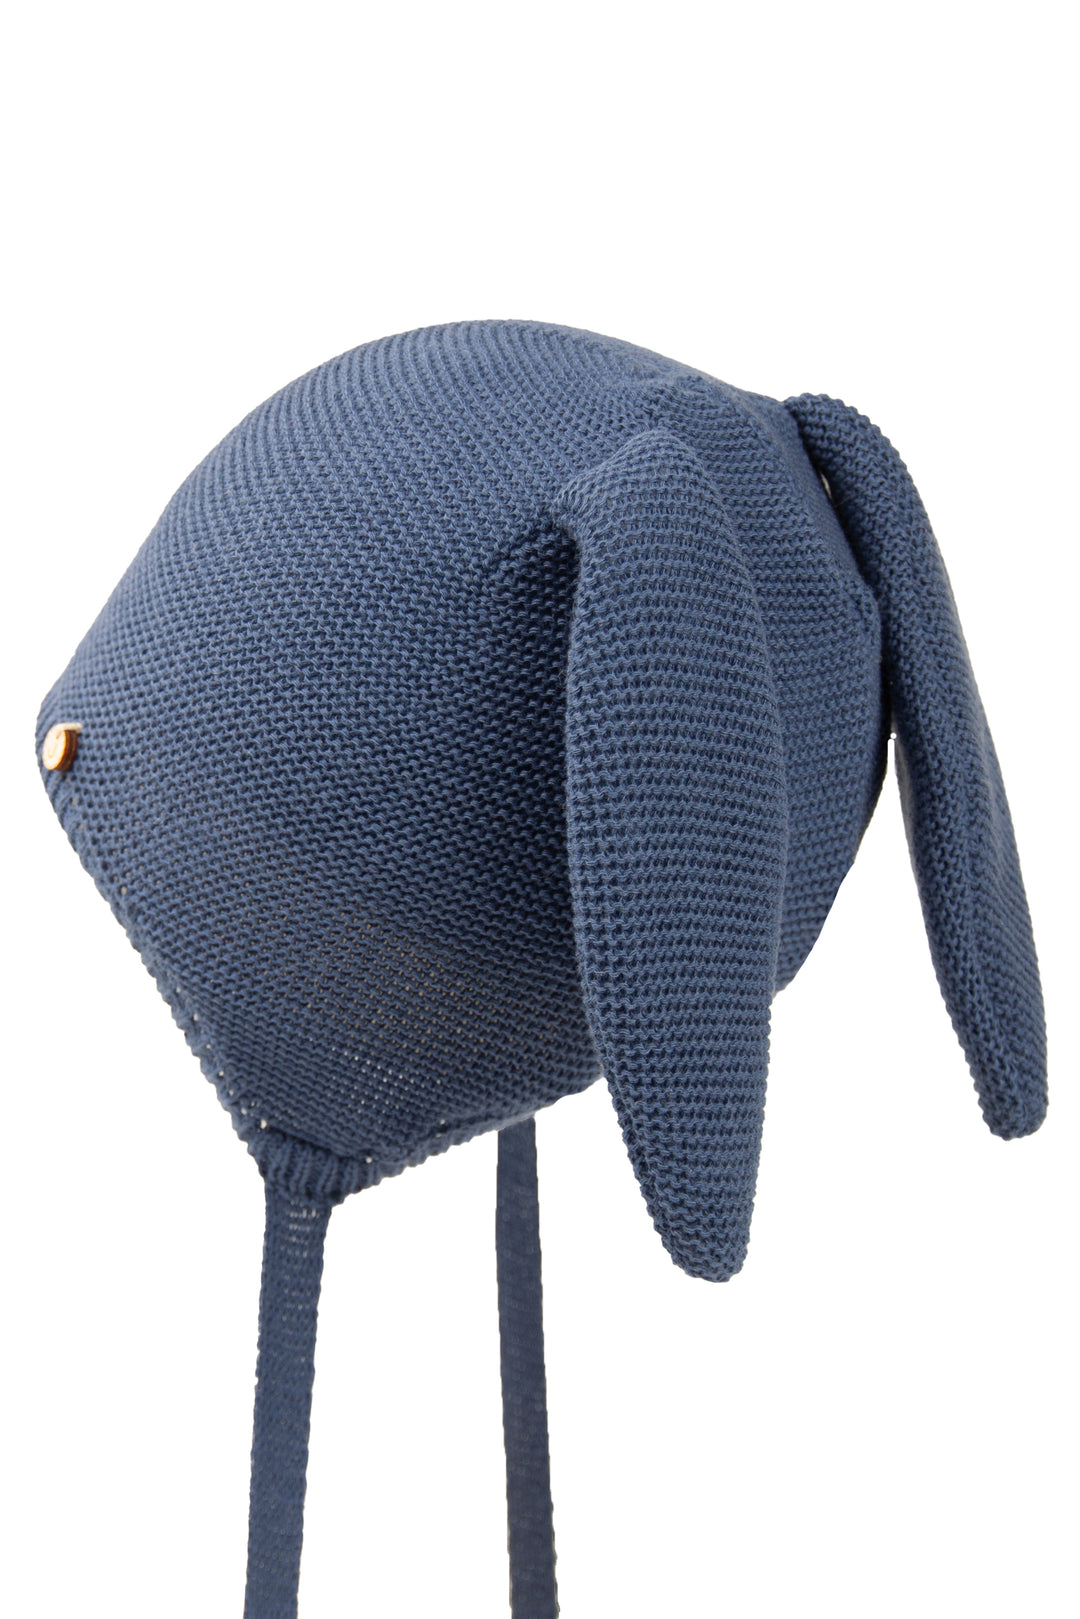 Jamiks "Bugs" Denim Blue Knit Bunny Hat | Millie and John